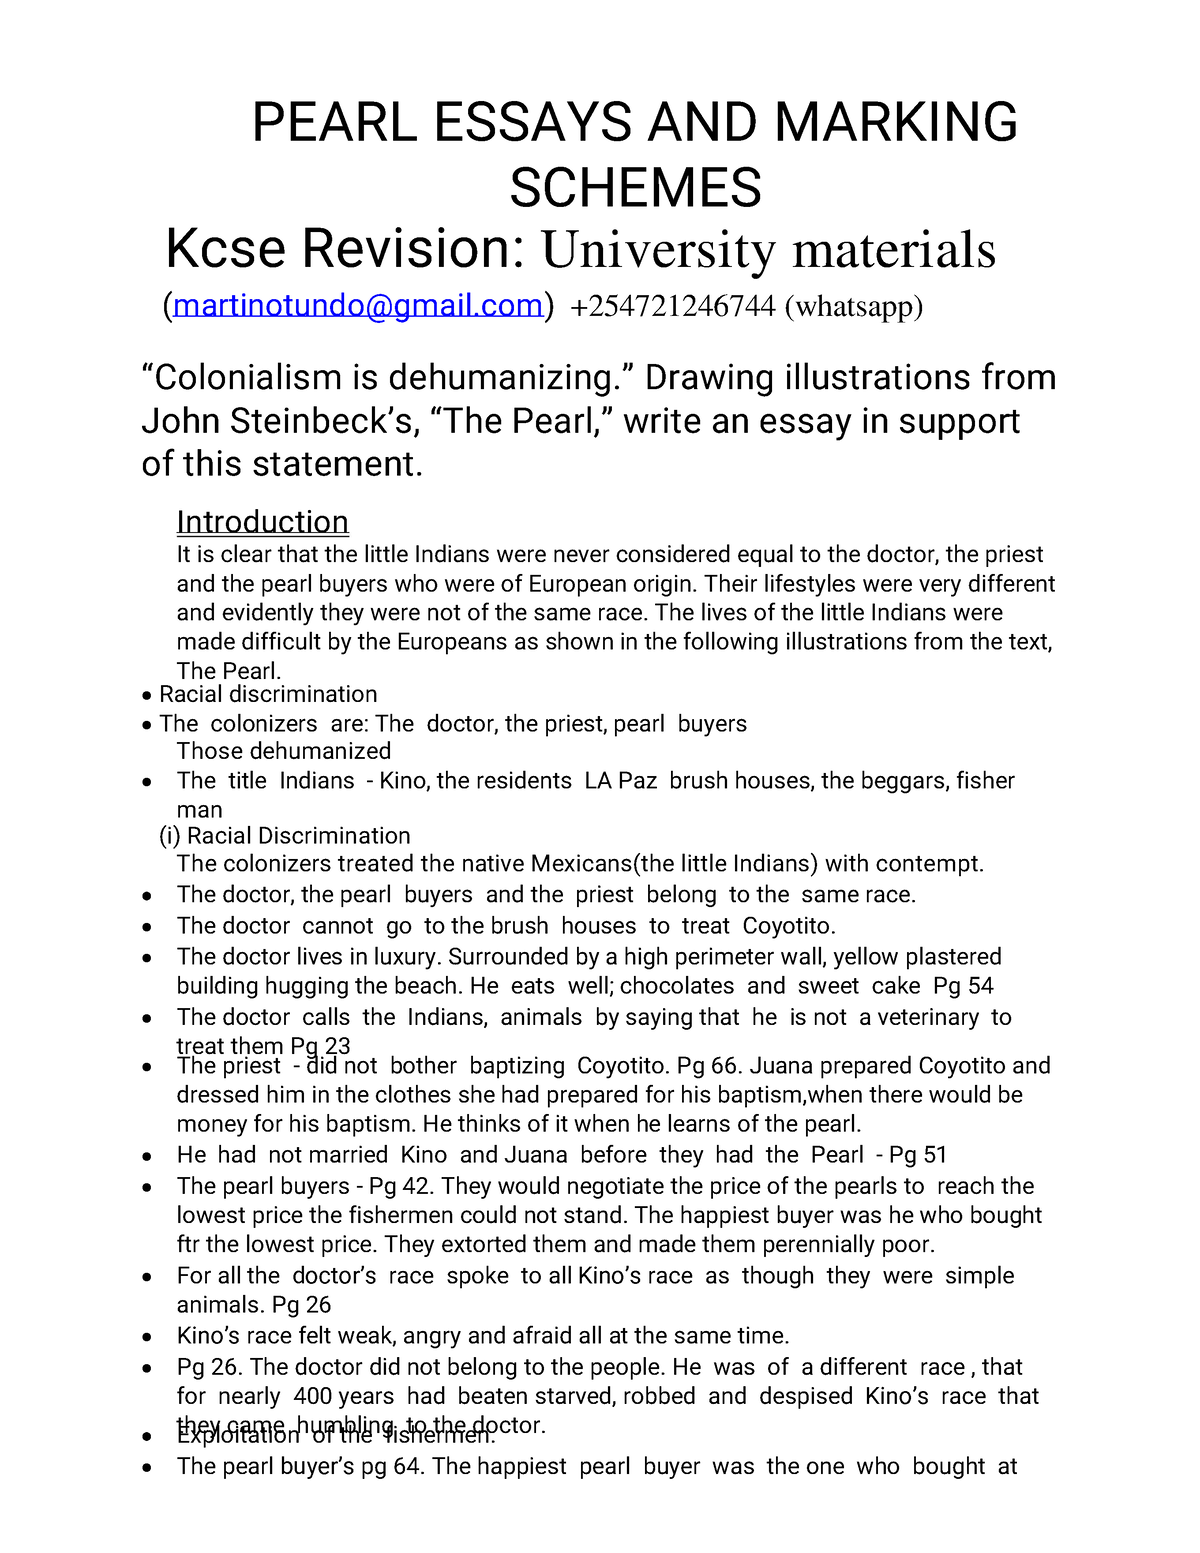 kcse essays based on the pearl